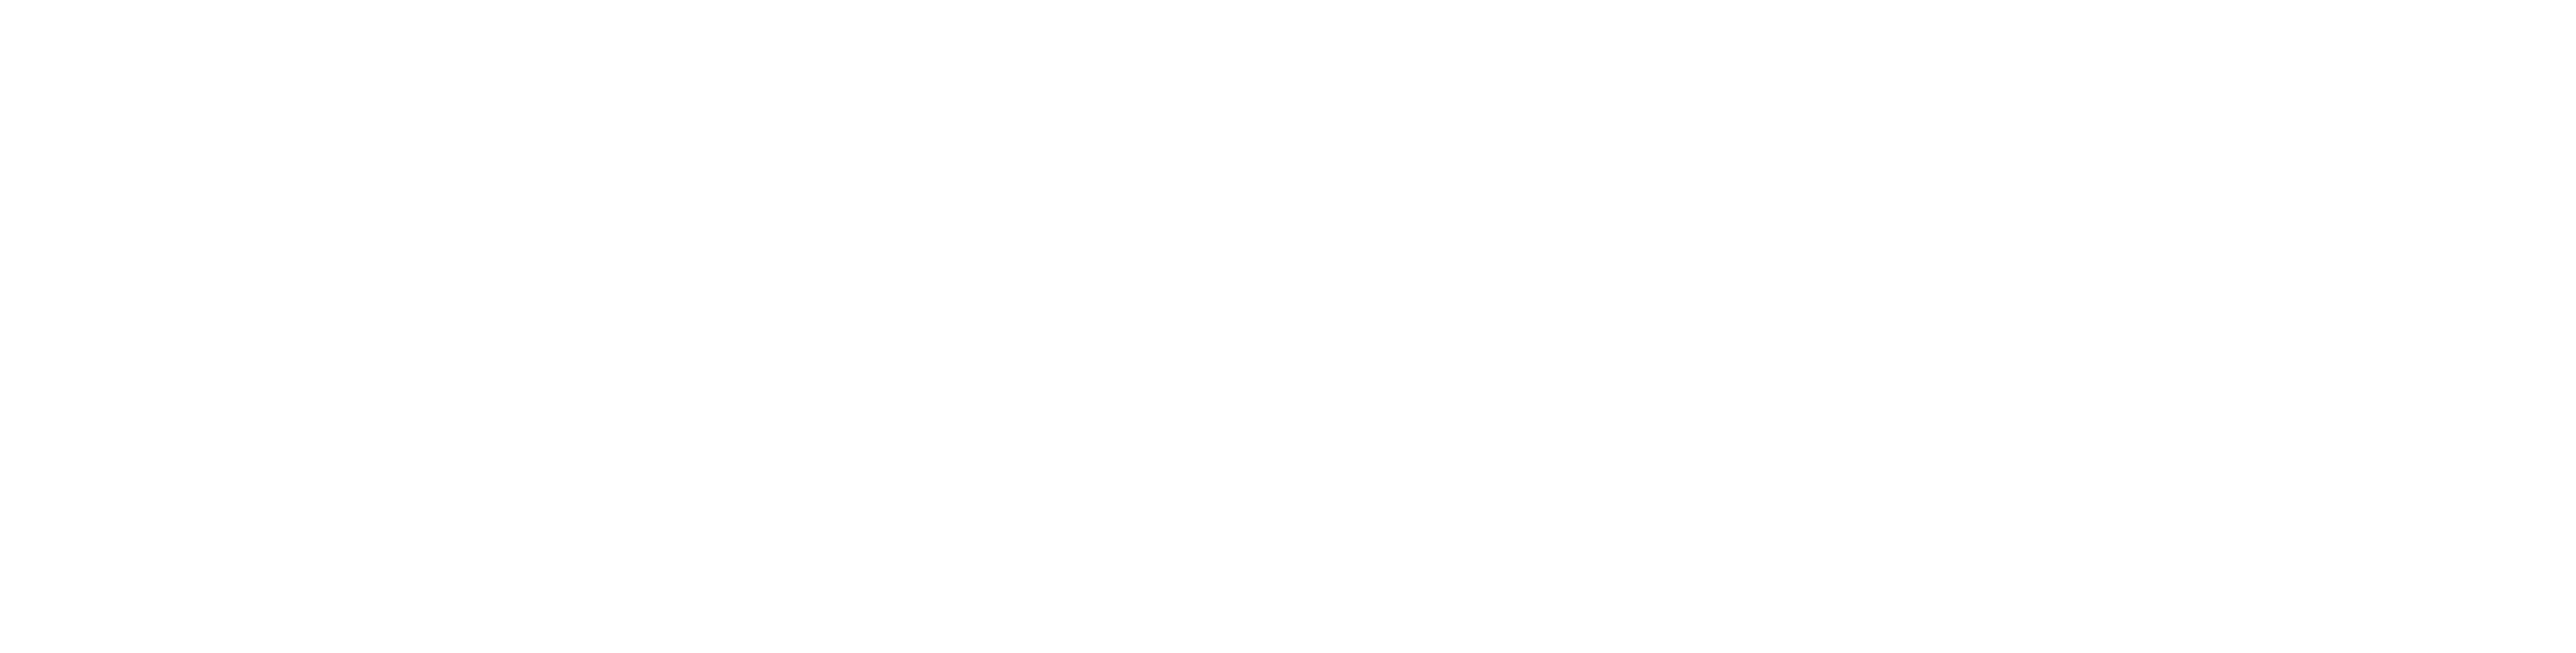 Lezioni Hatha e Yin Yoga Verona